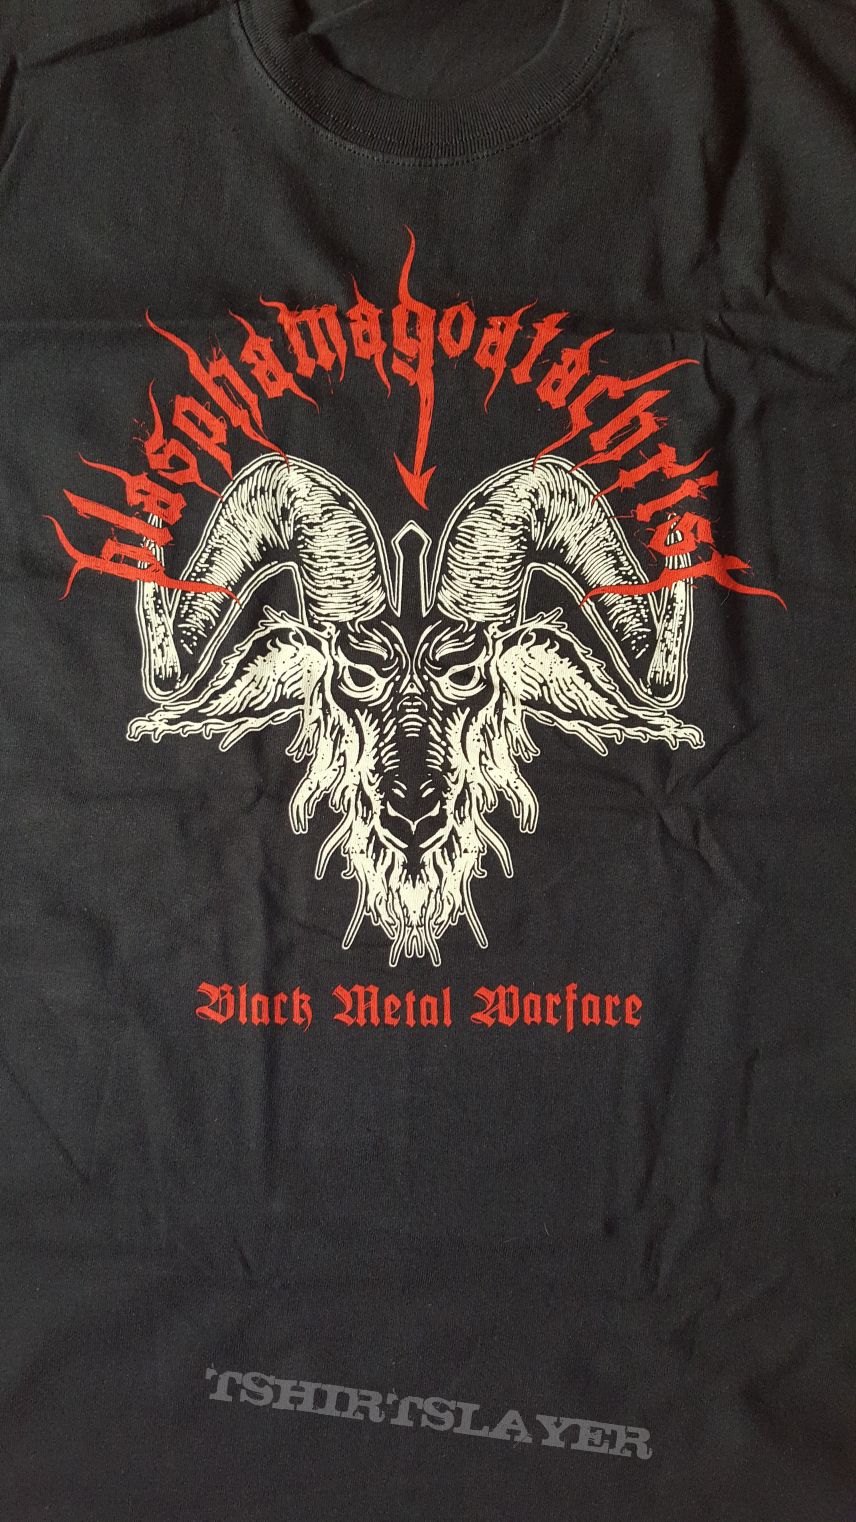 Blasphamagoatachrist - Black Metal Warfare 